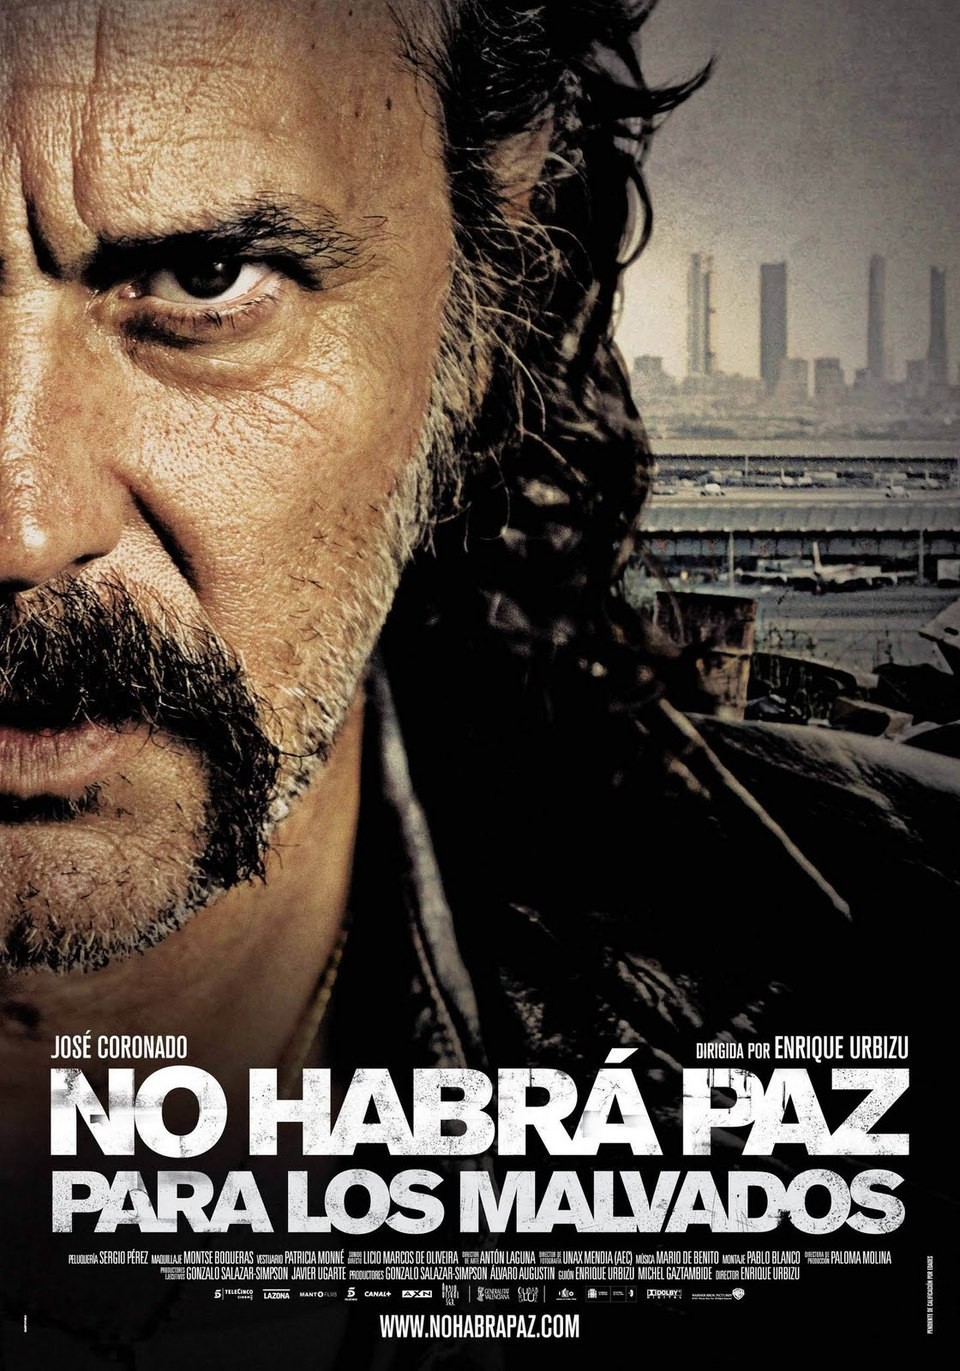 Extra Large Movie Poster Image for No habrá paz para los malvados (#2 of 2)